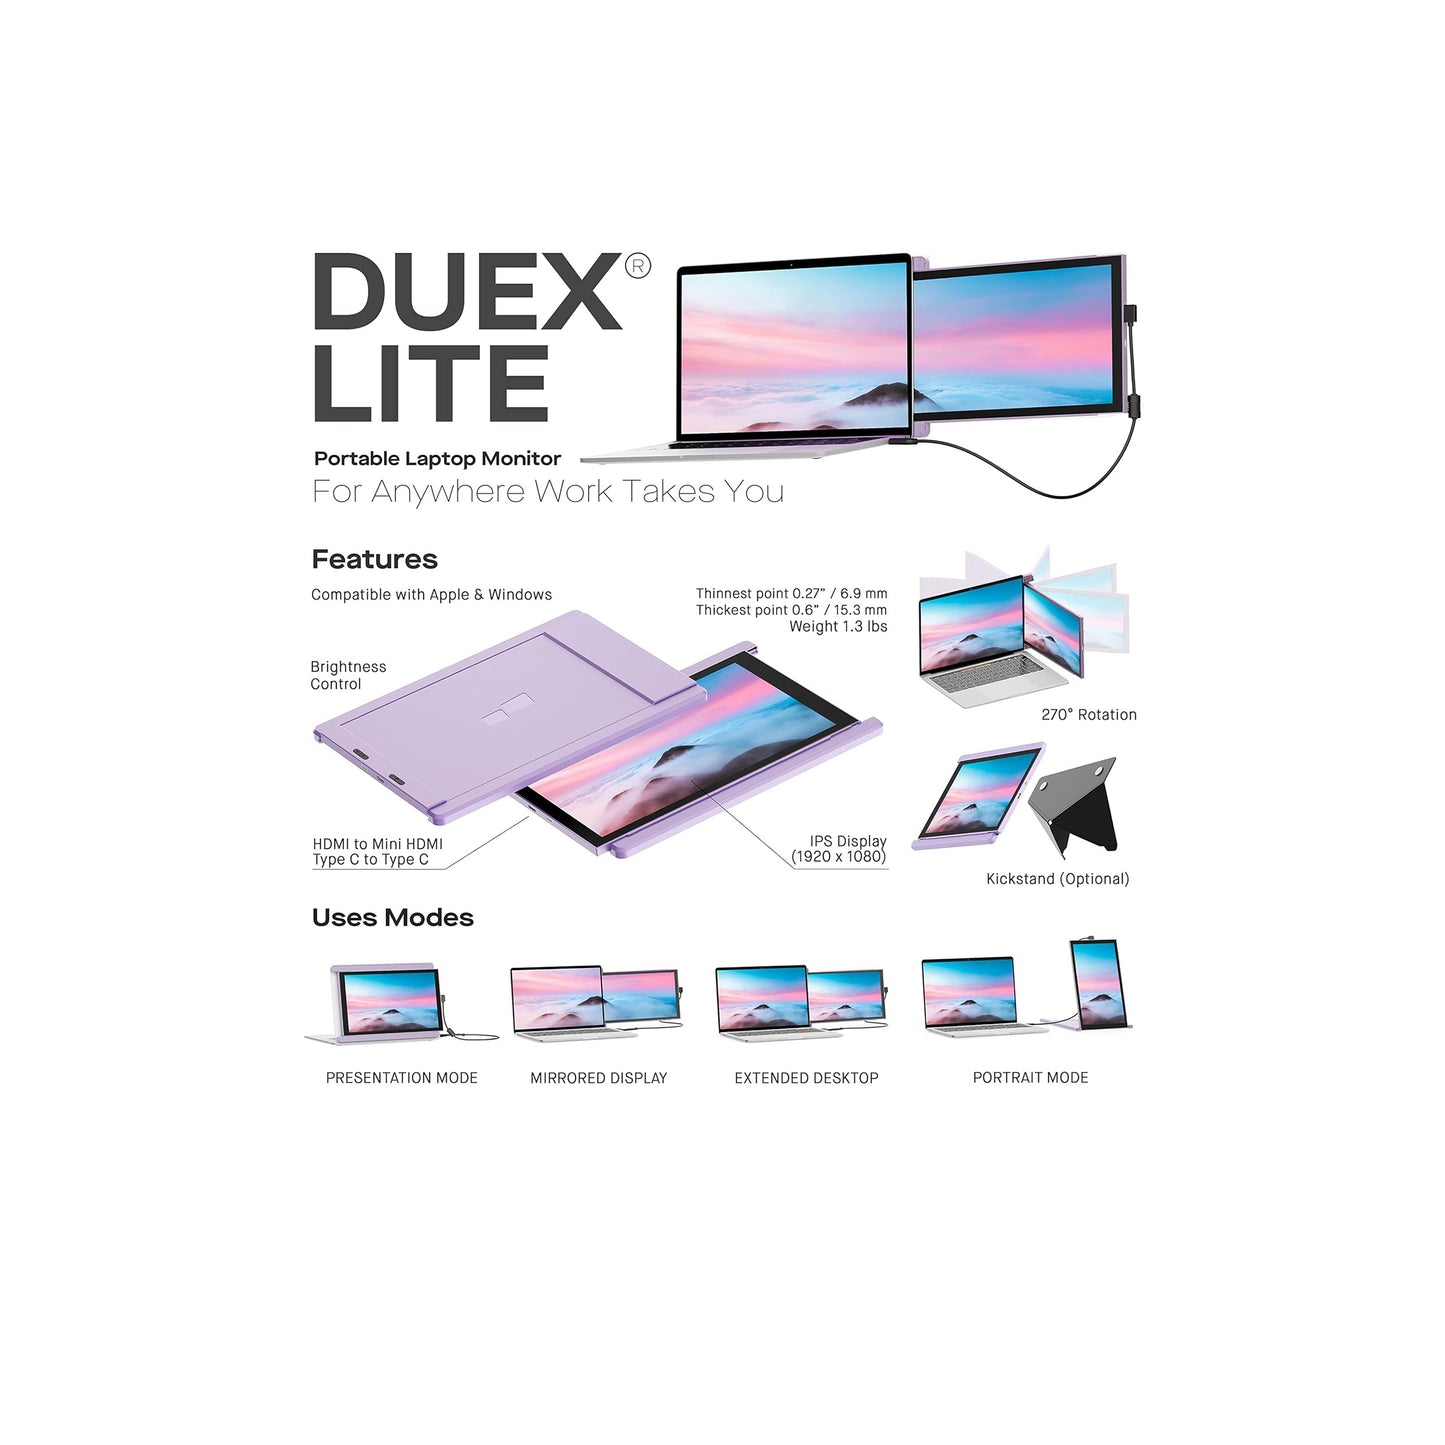 Mobile Pixels Duex Lite Purple 12.5 inch LCD